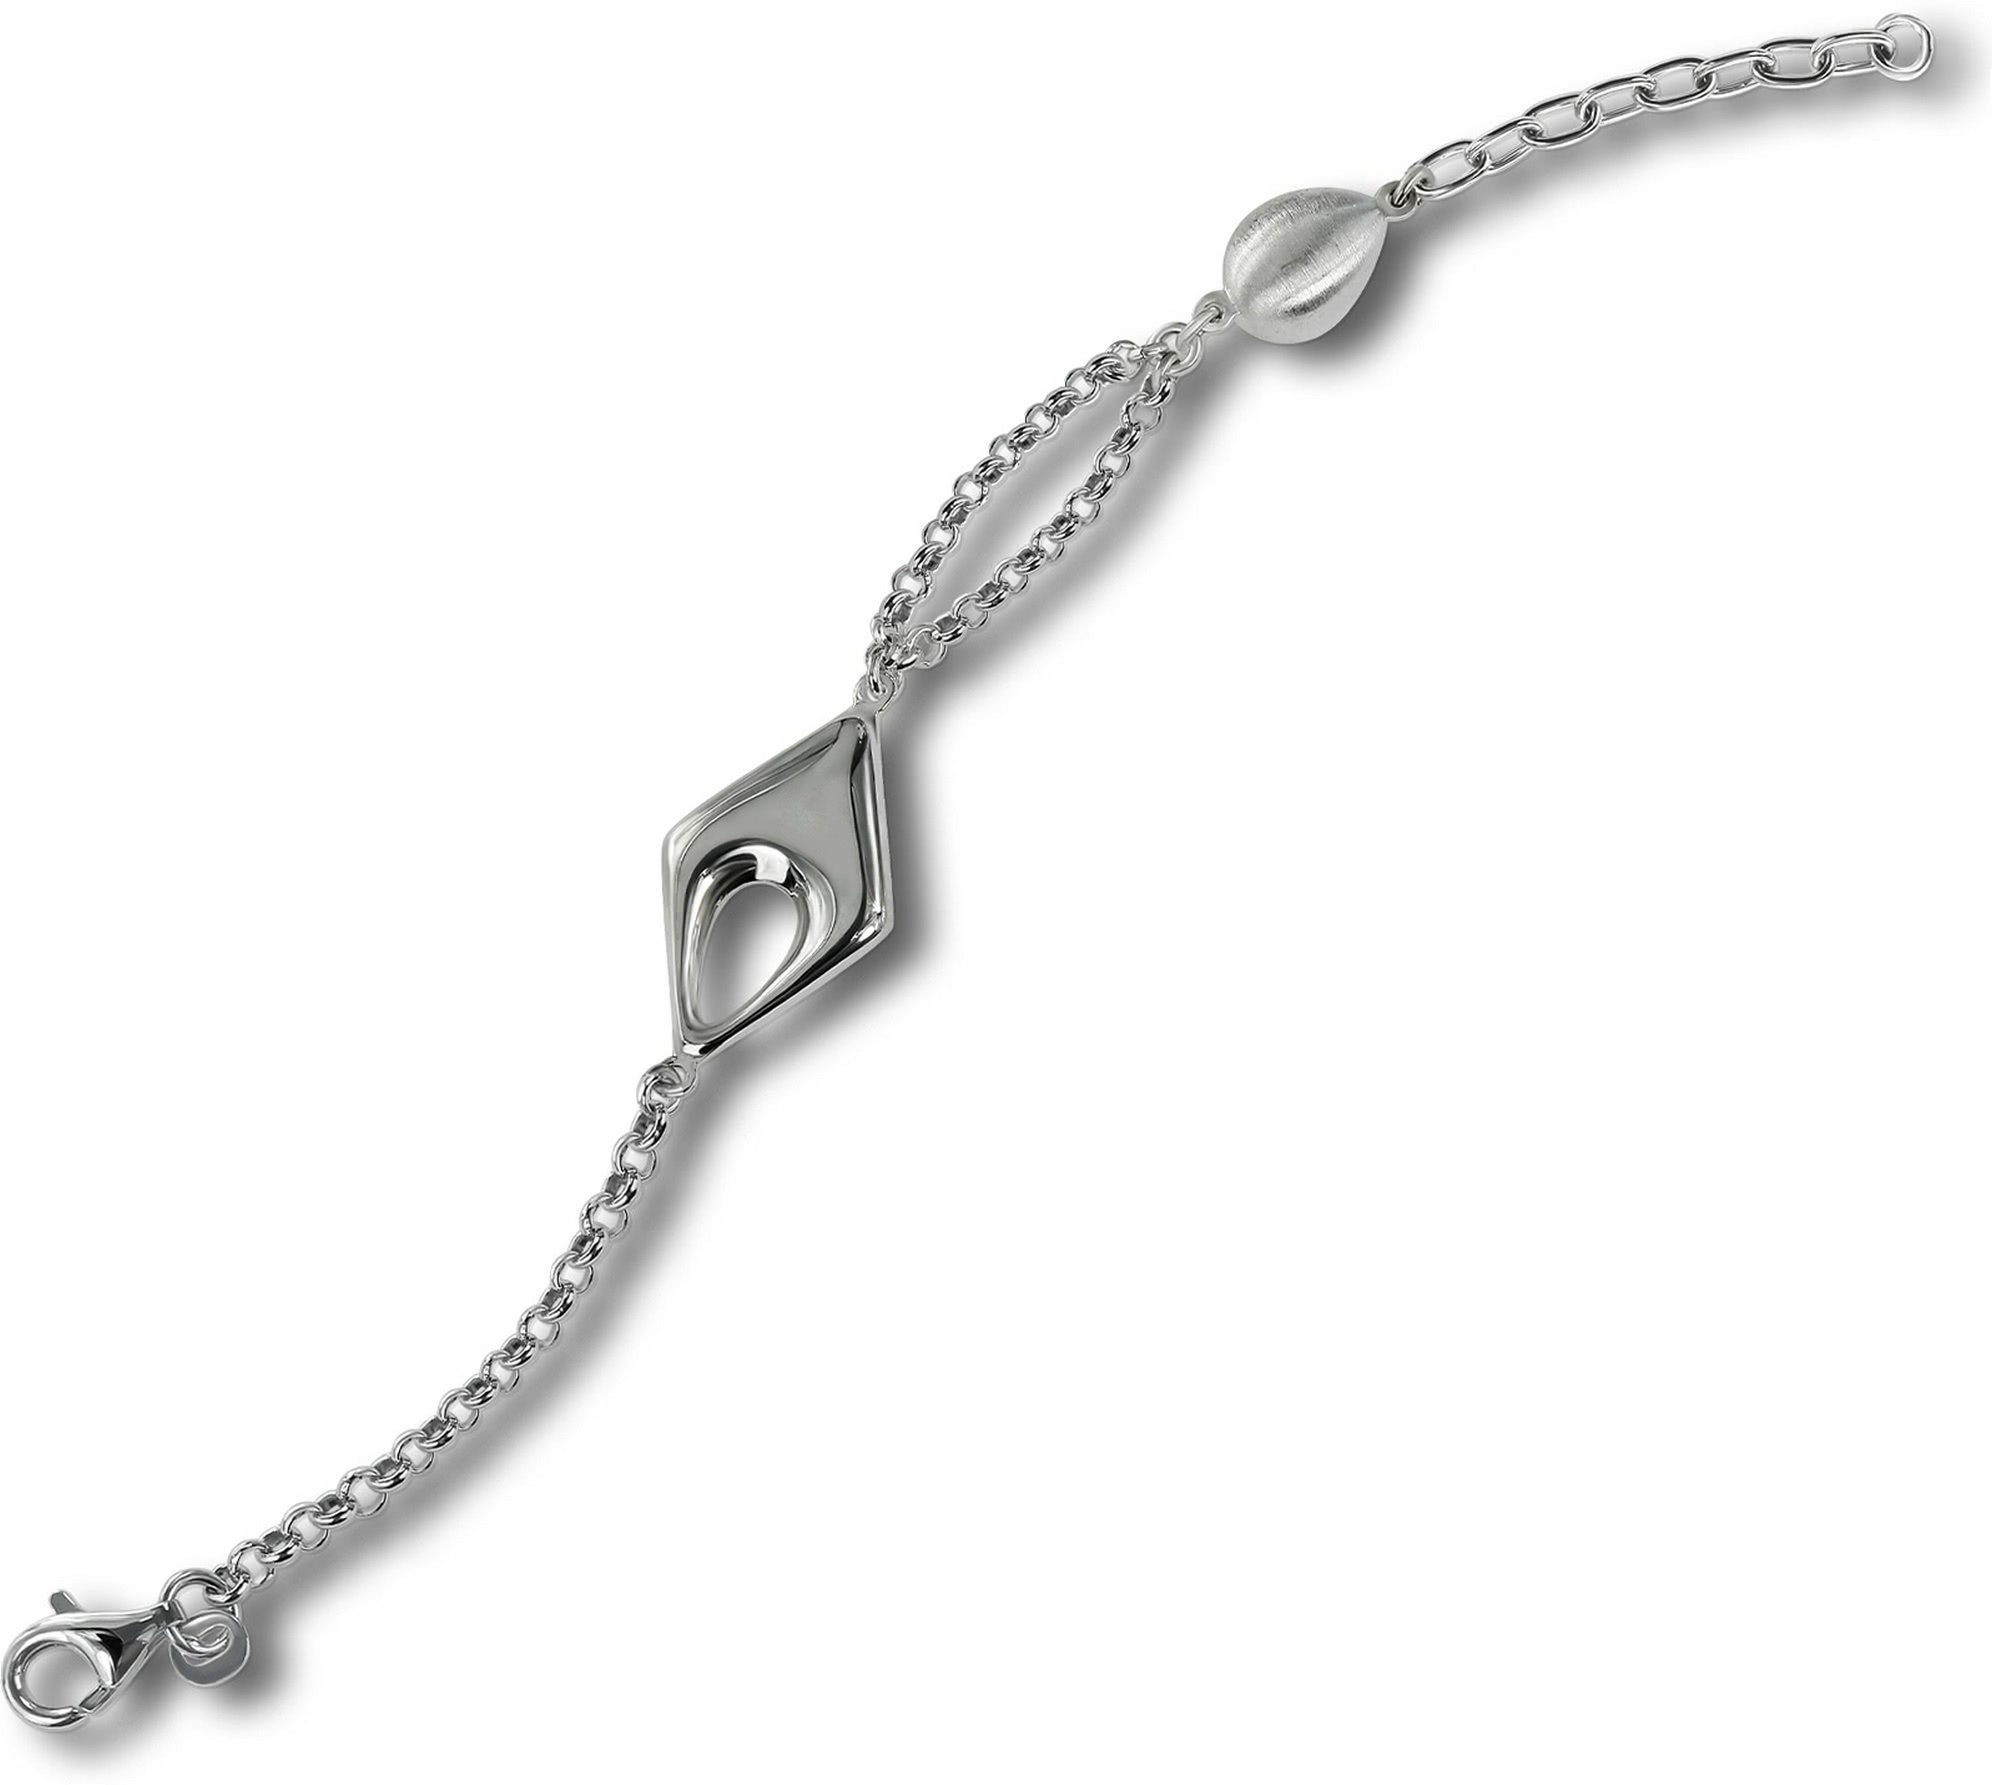 18,5cm, Armband Silberarmband (Armband), für Balia Damen Armband ca. Balia 925 Silber (Drop) Silber mattiert